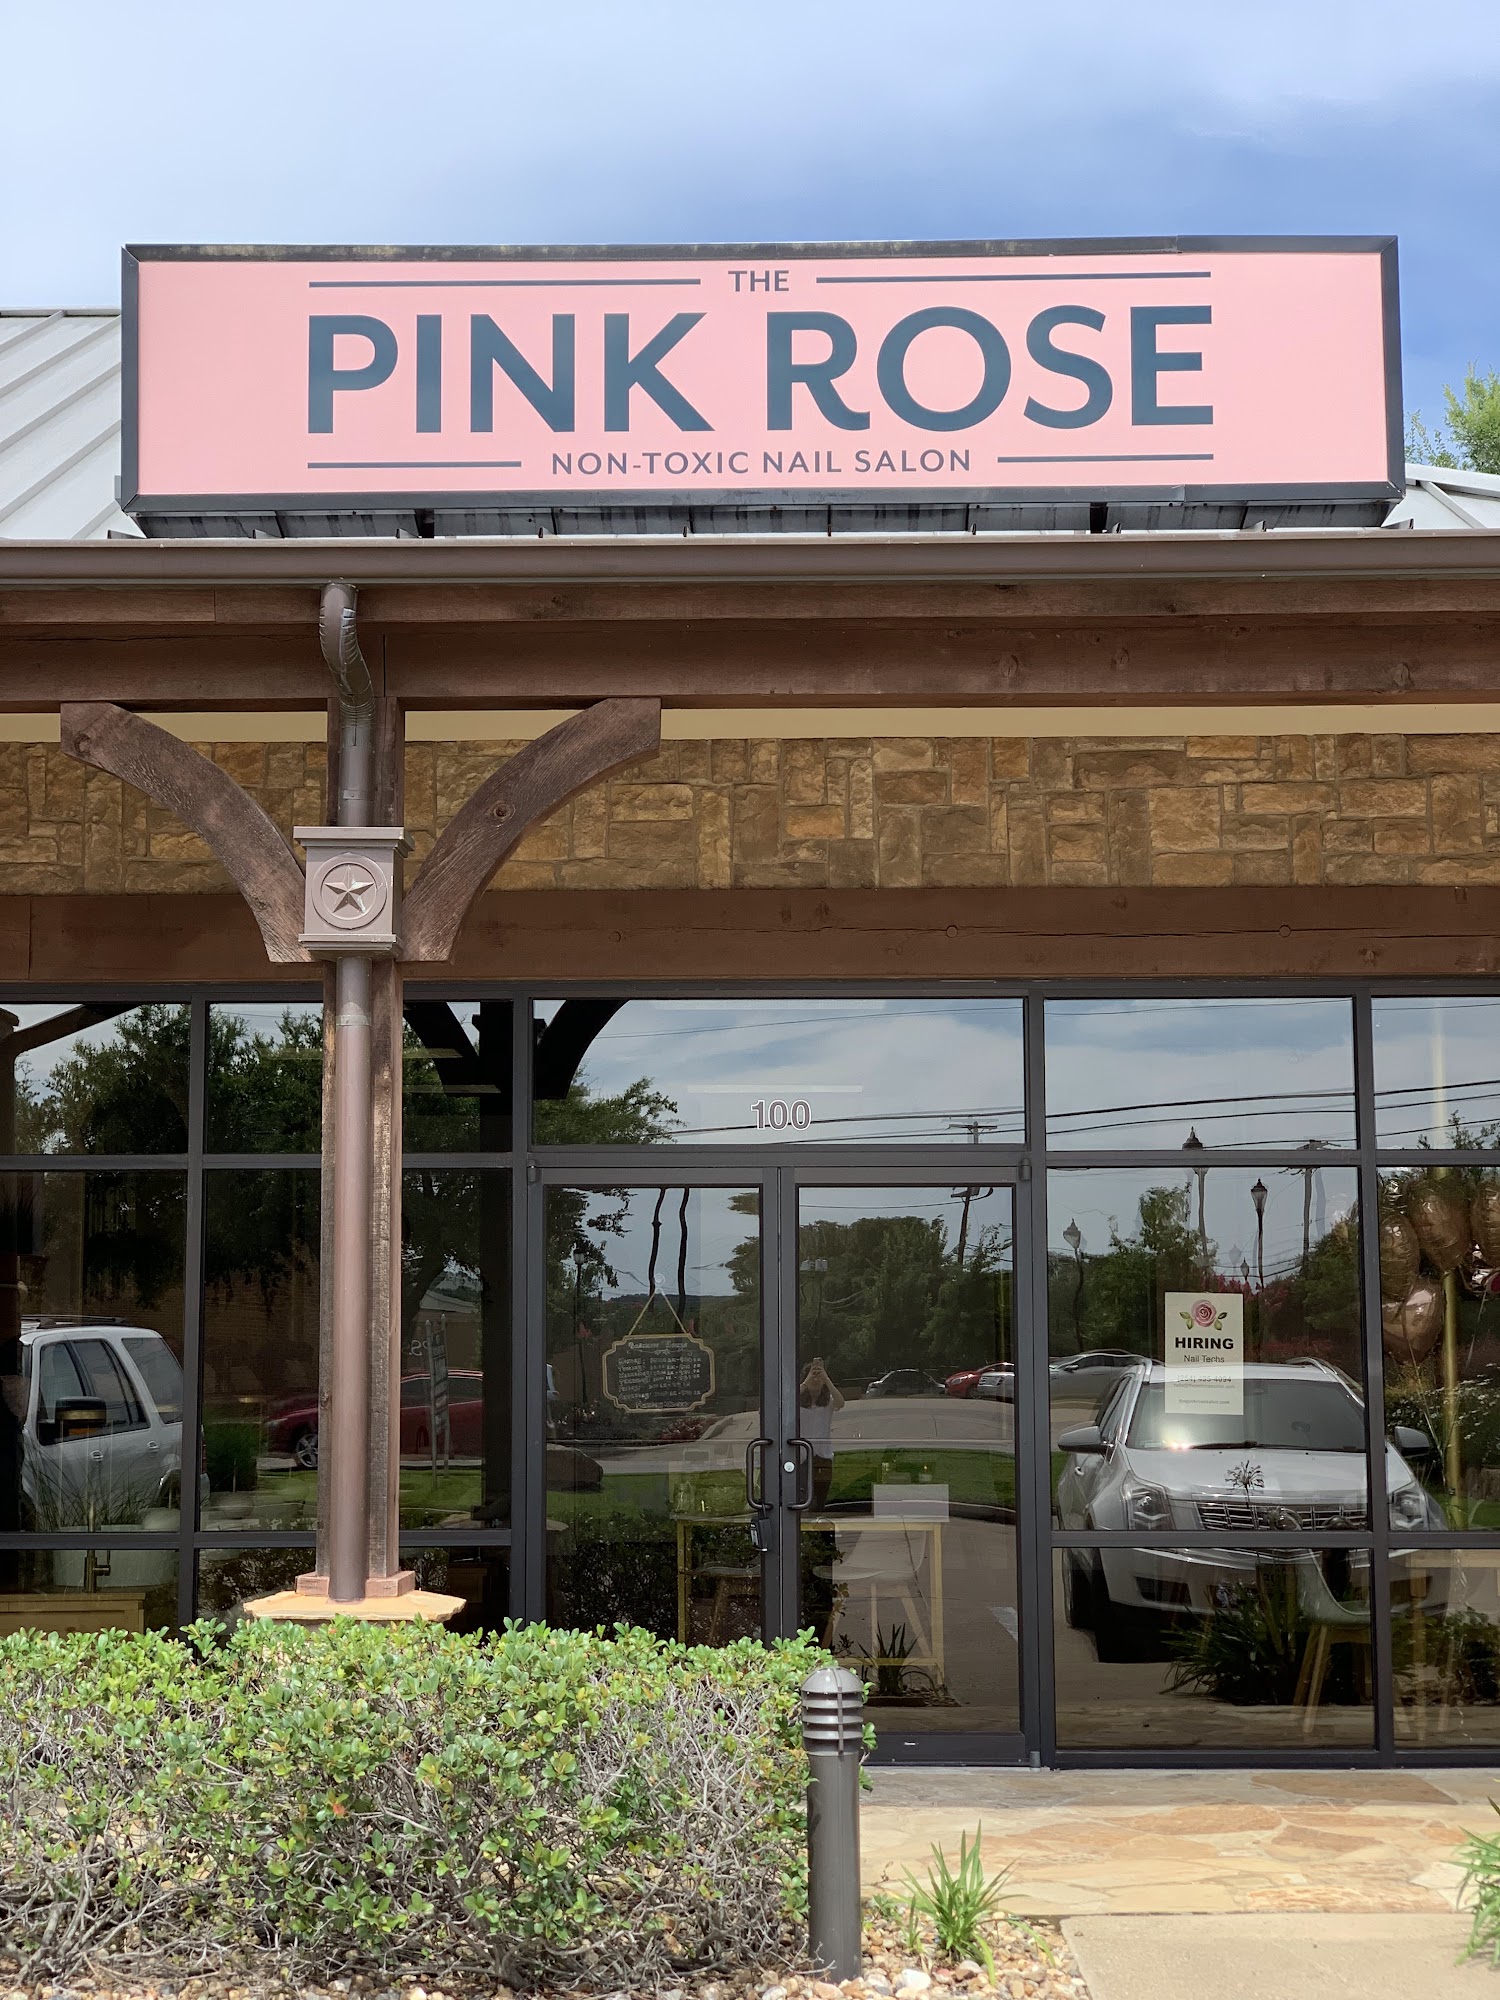 The Pink Rose Non-Toxic Nail Salon